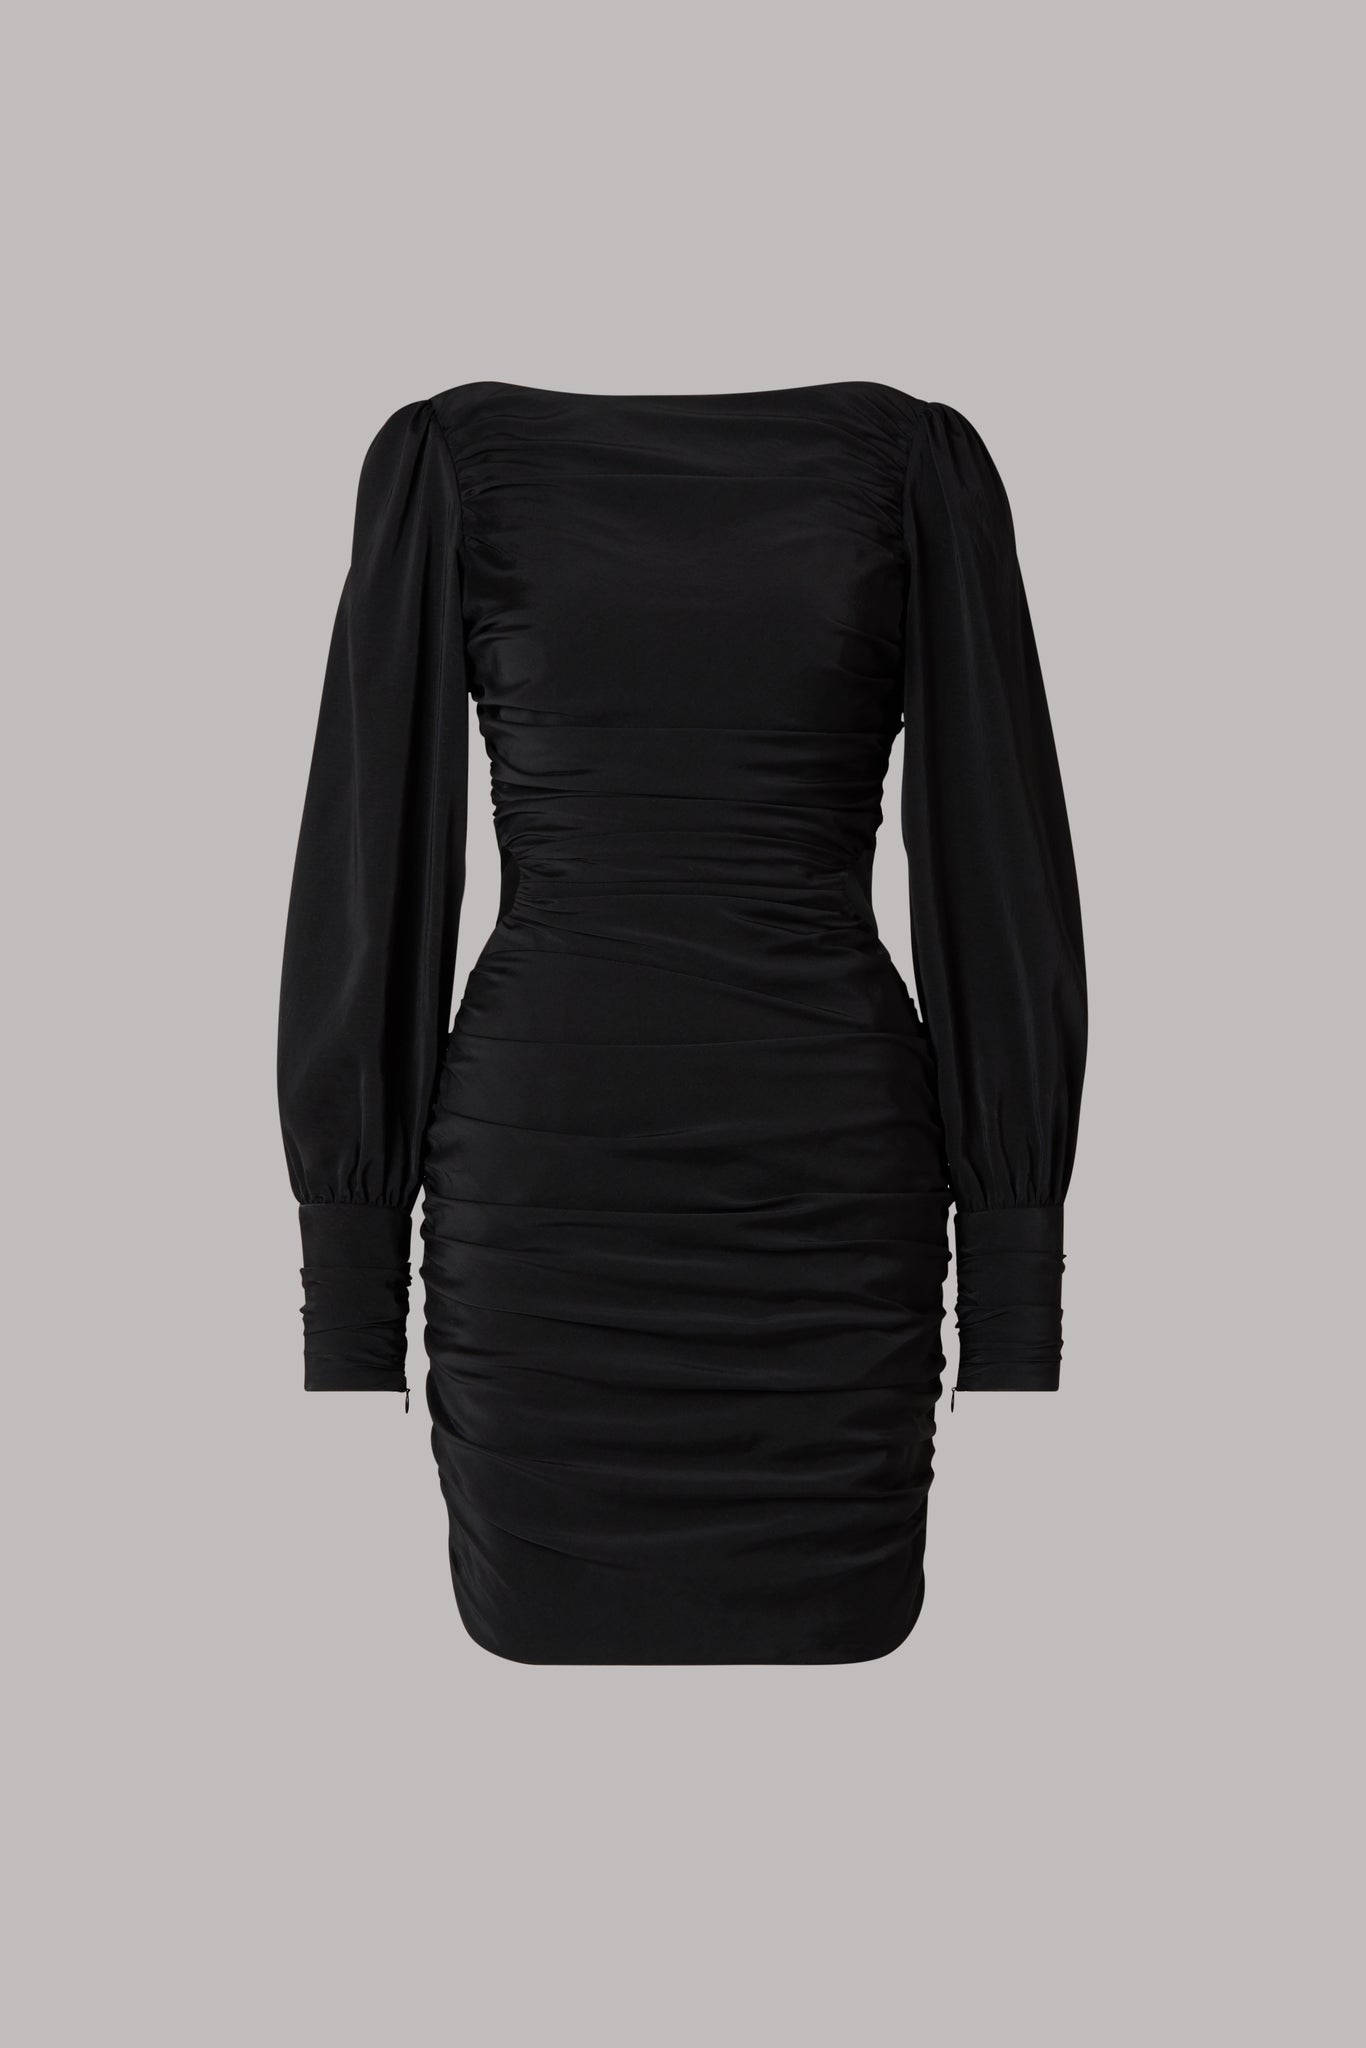 Ghorēe Brava black mini dress